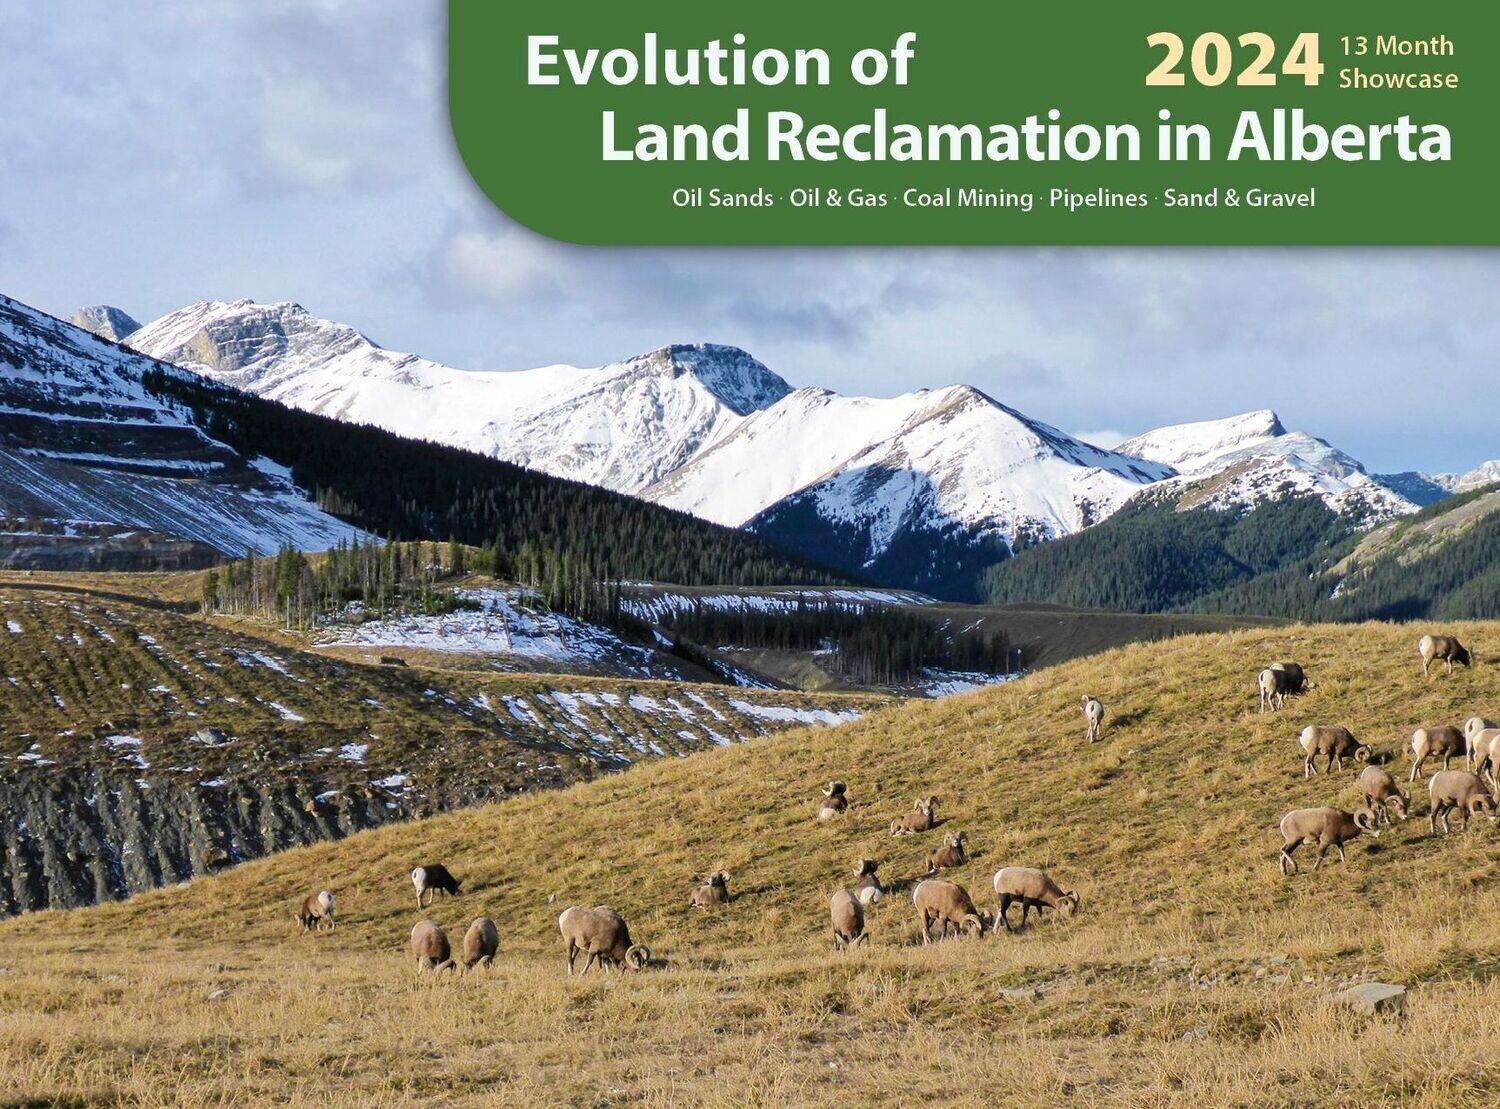 Evolution of Land Reclamation in Alberta 2024